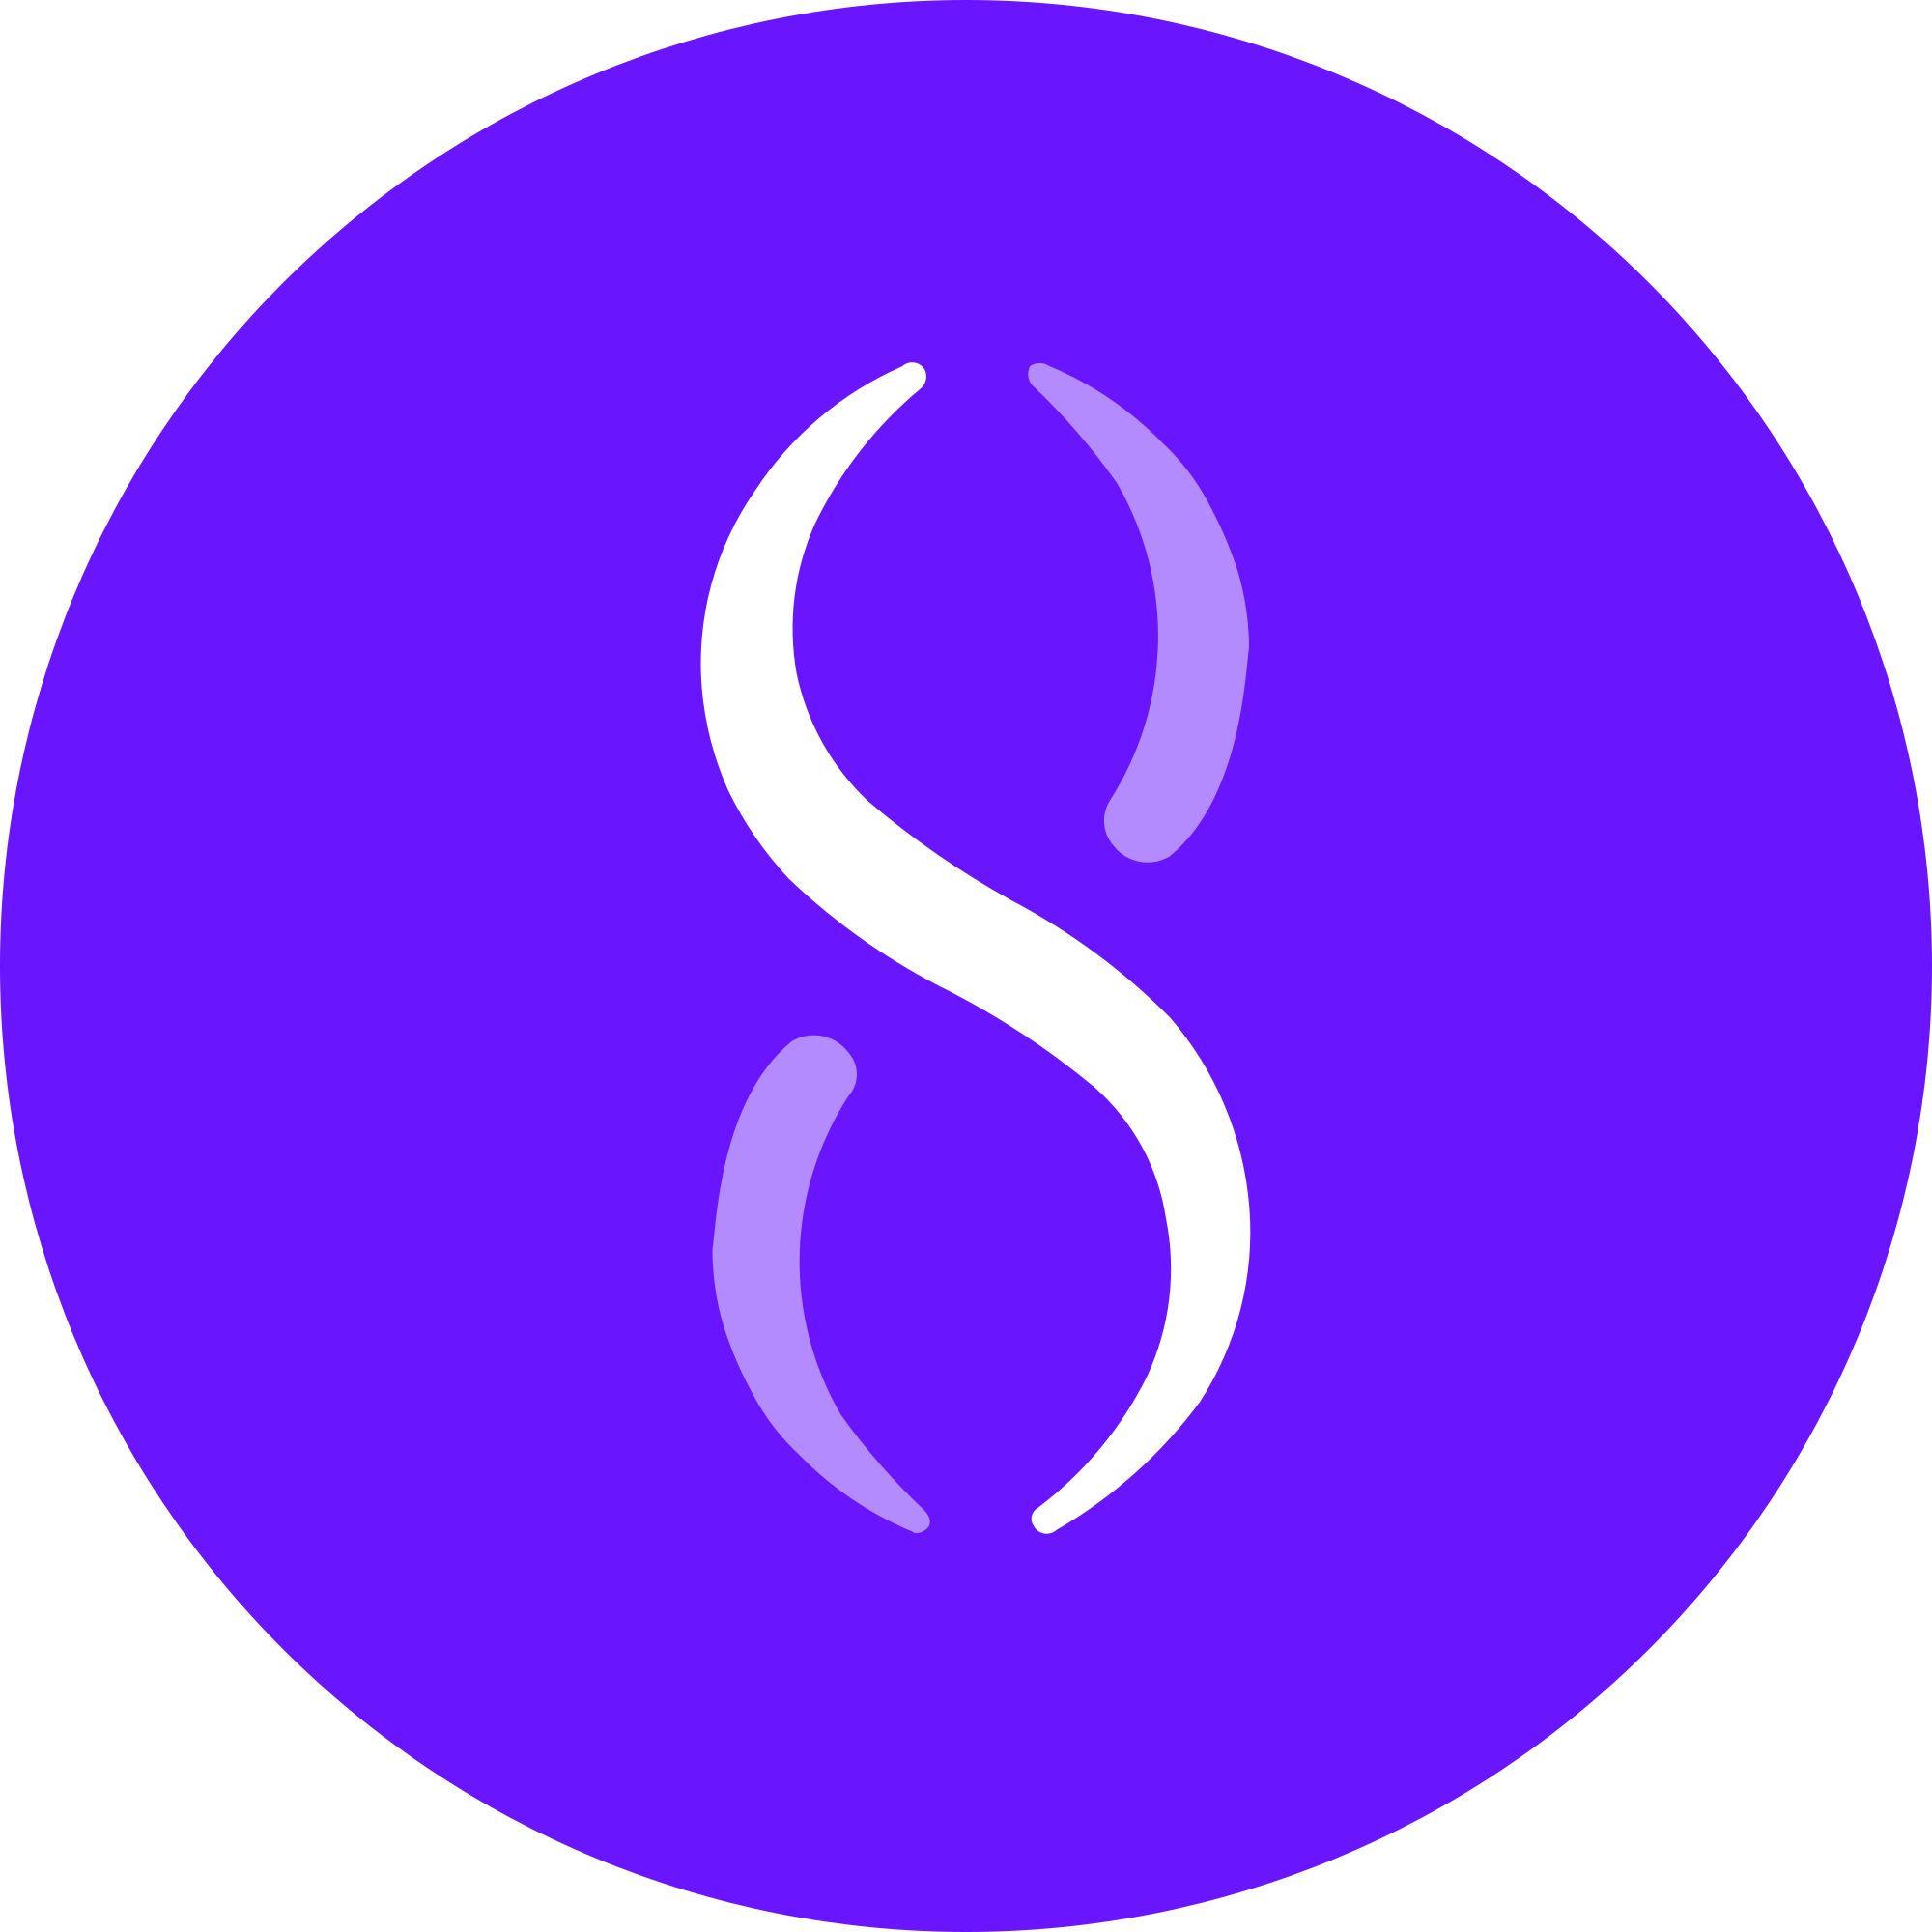 SingularityNET (AGI) Logo .SVG and .PNG Files Download